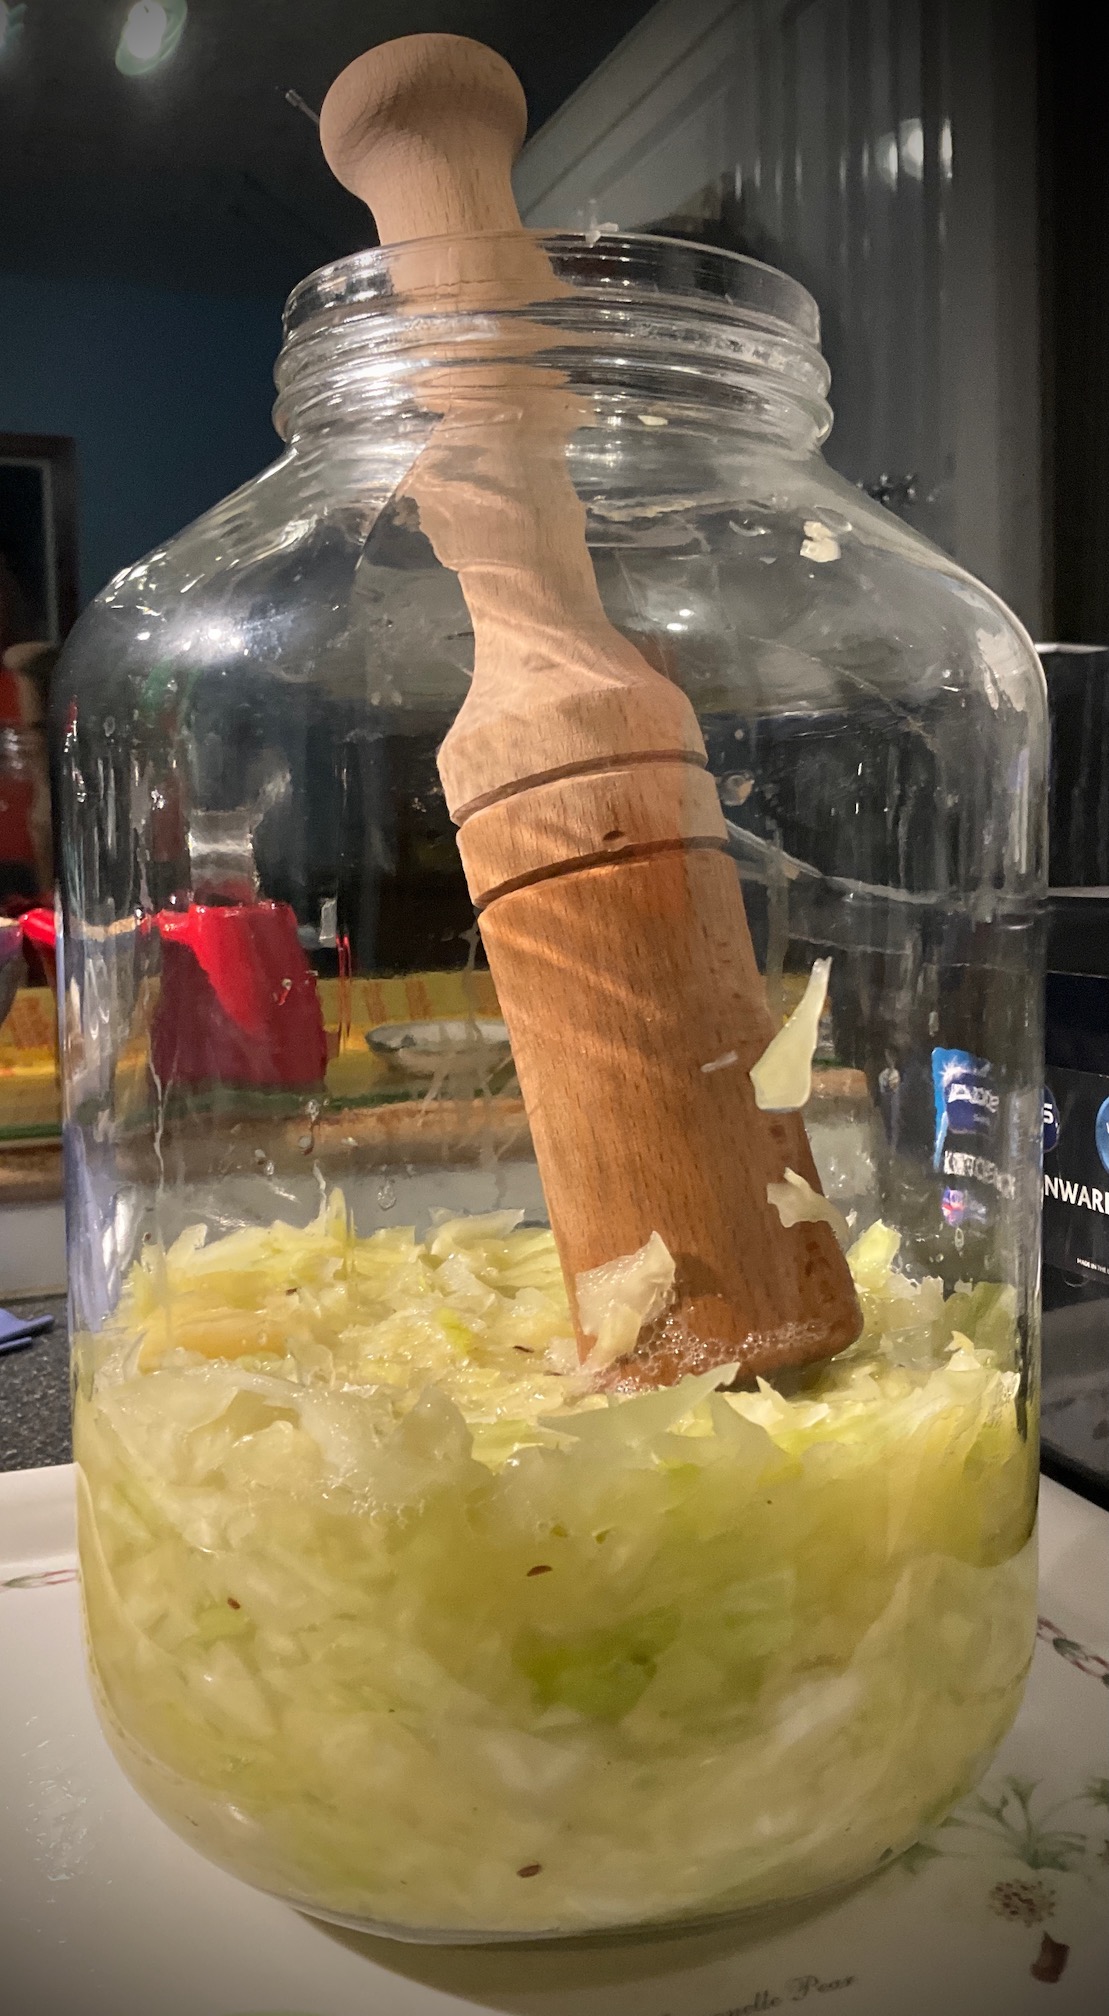 How to make Sauerkraut